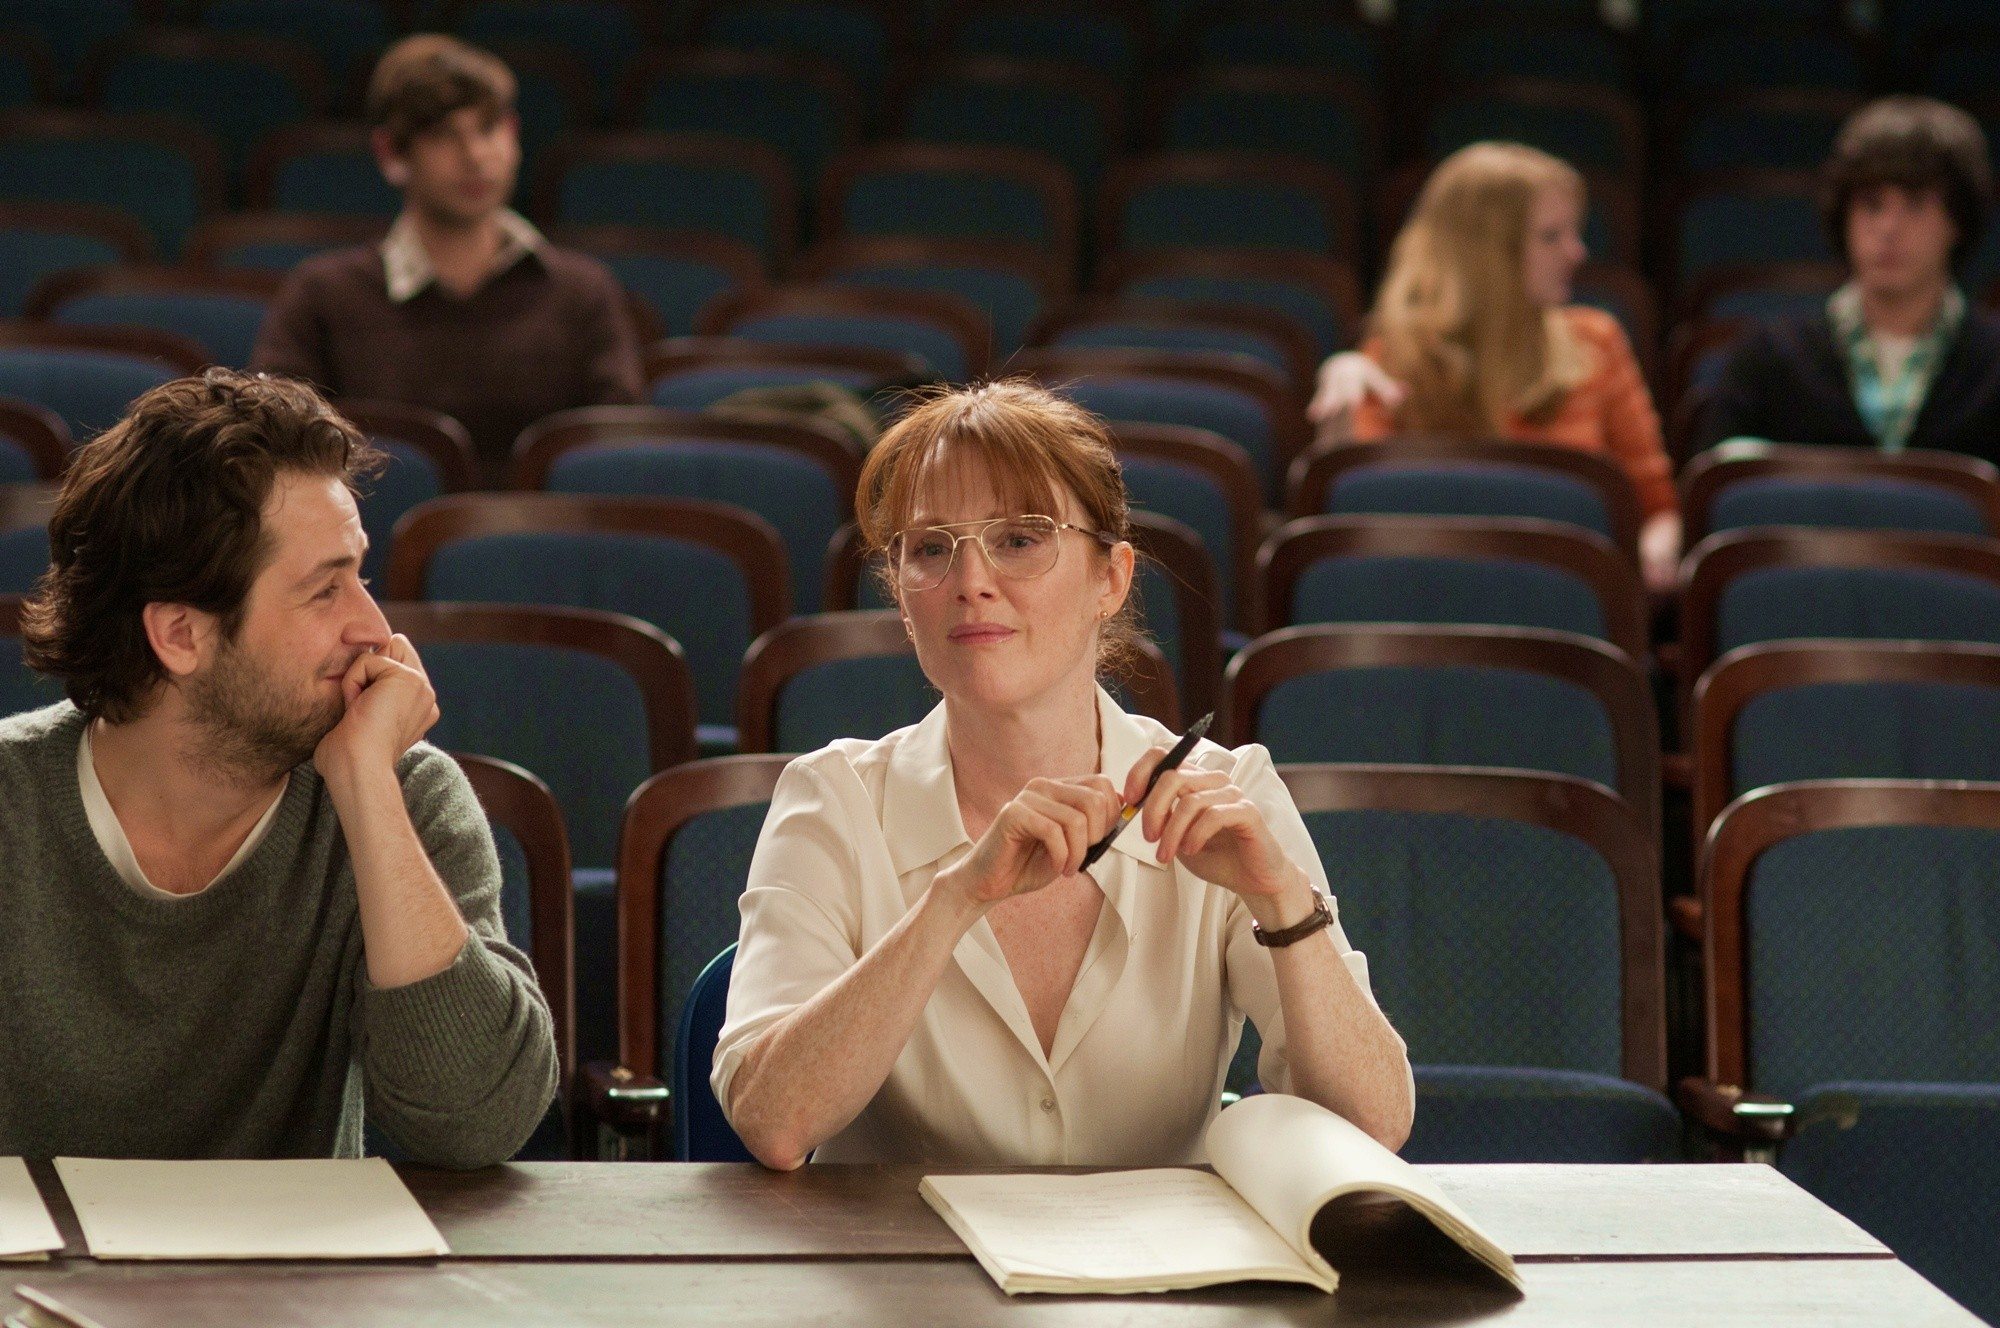 Michael Angarano stars as Jason Sherwood and Julianne Moore stars as Linda Sinclair in Tribeca Film's The English Teacher (2013)